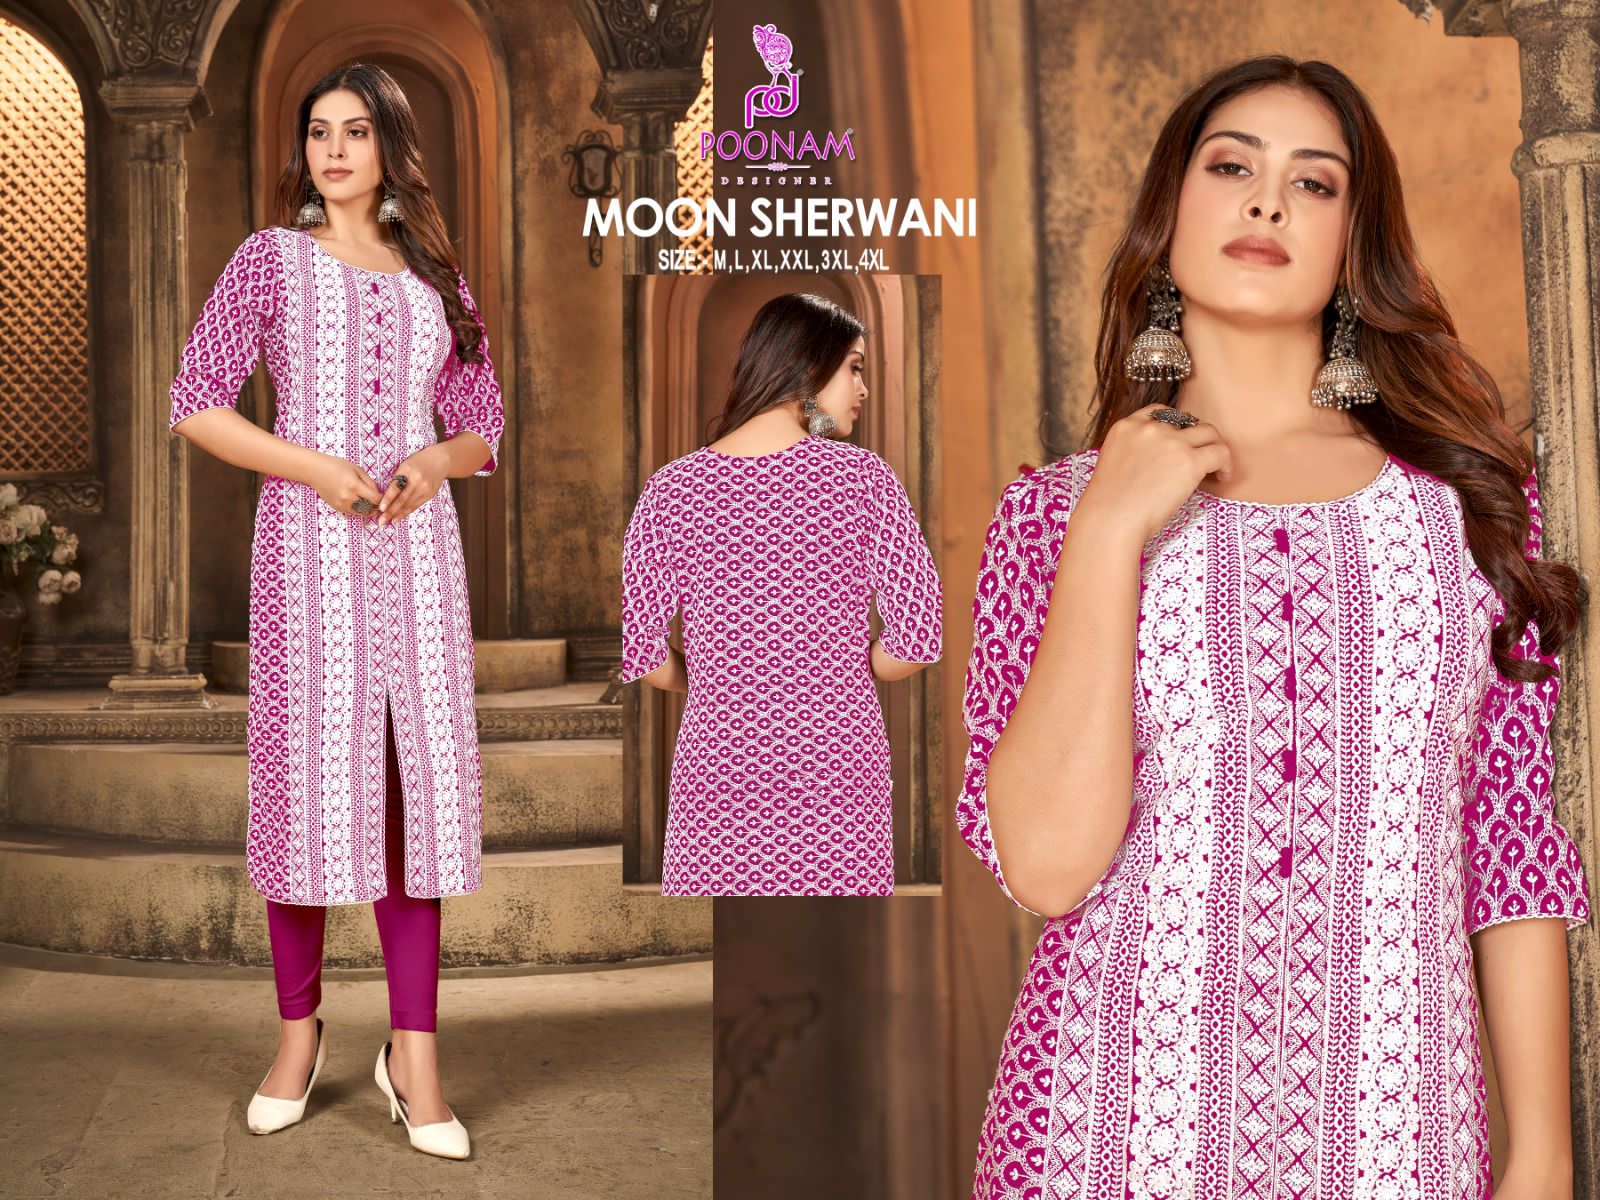 Poonam Moon Sherwani collection 8